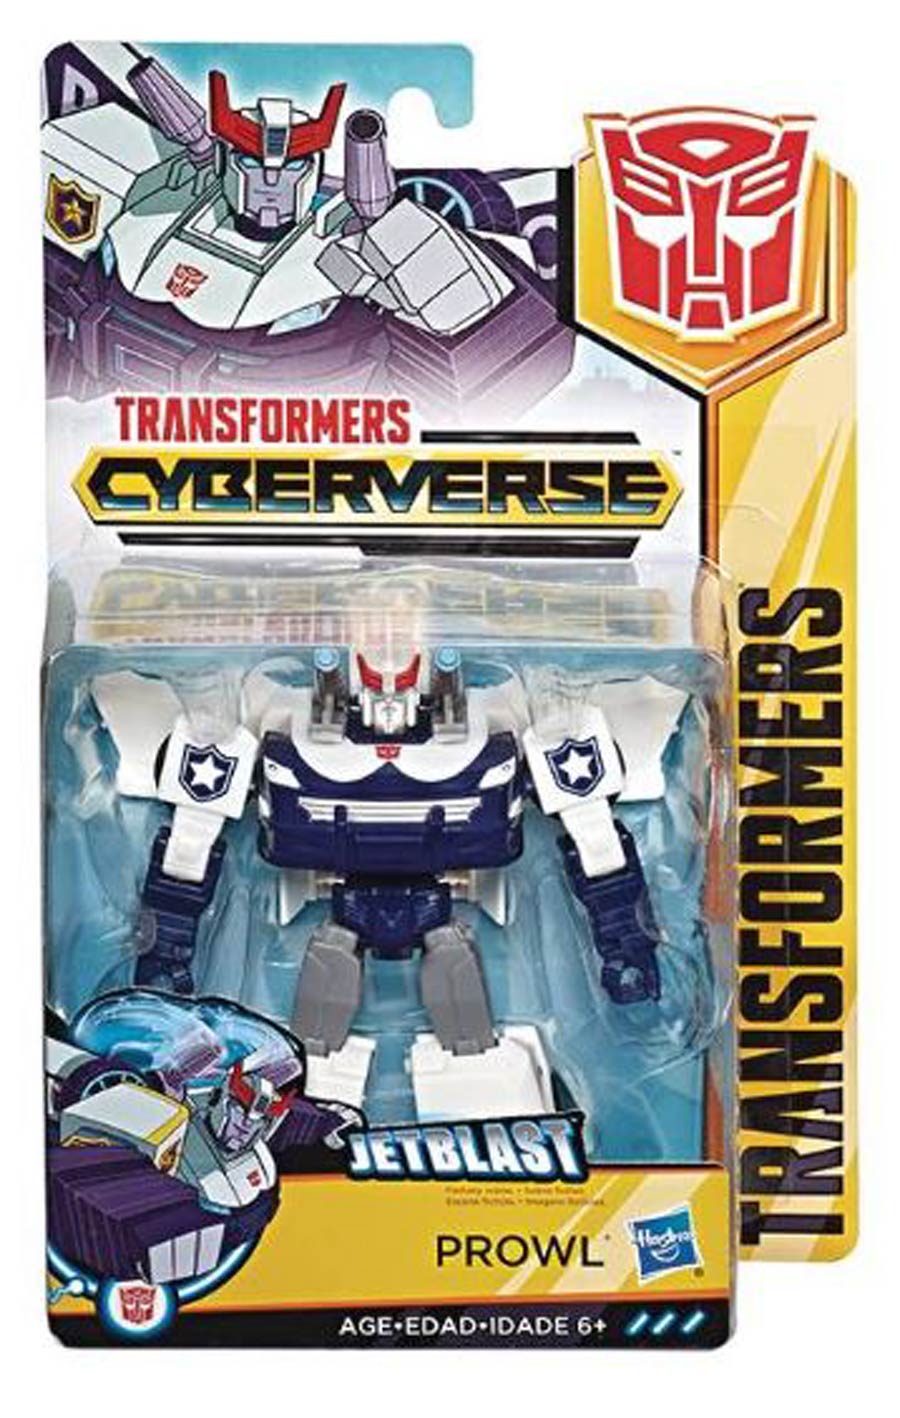 Transformers Cyberverse Warrior Action Figure Assortment 201901 - Prowl